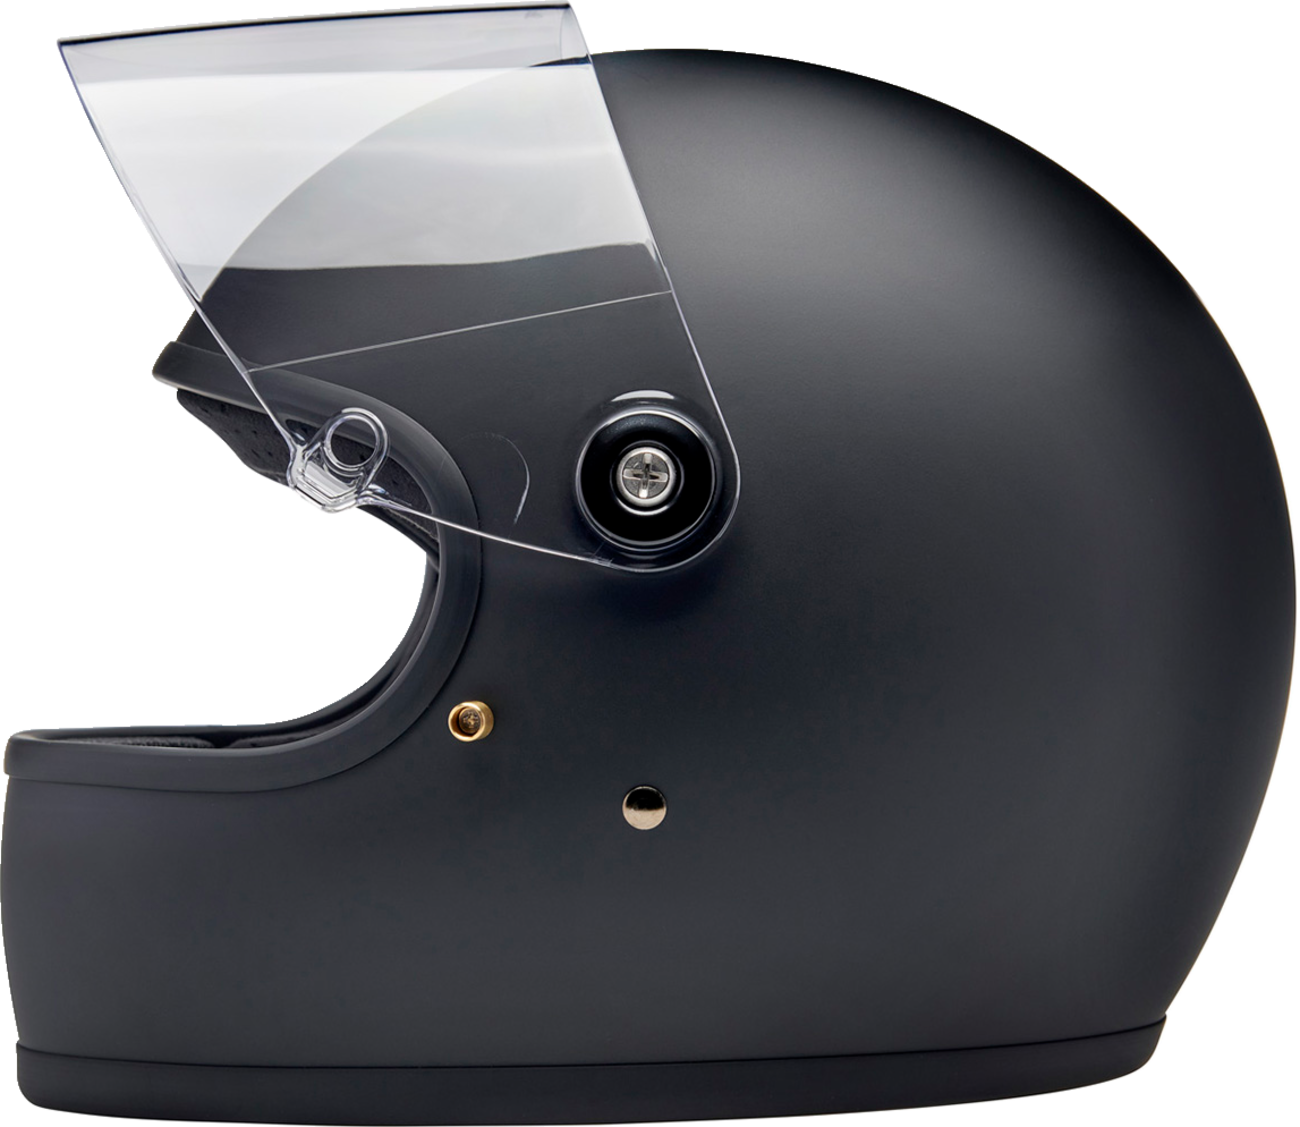 BILTWELL Gringo S Helmet - Flat Black - Medium 1003-201-503